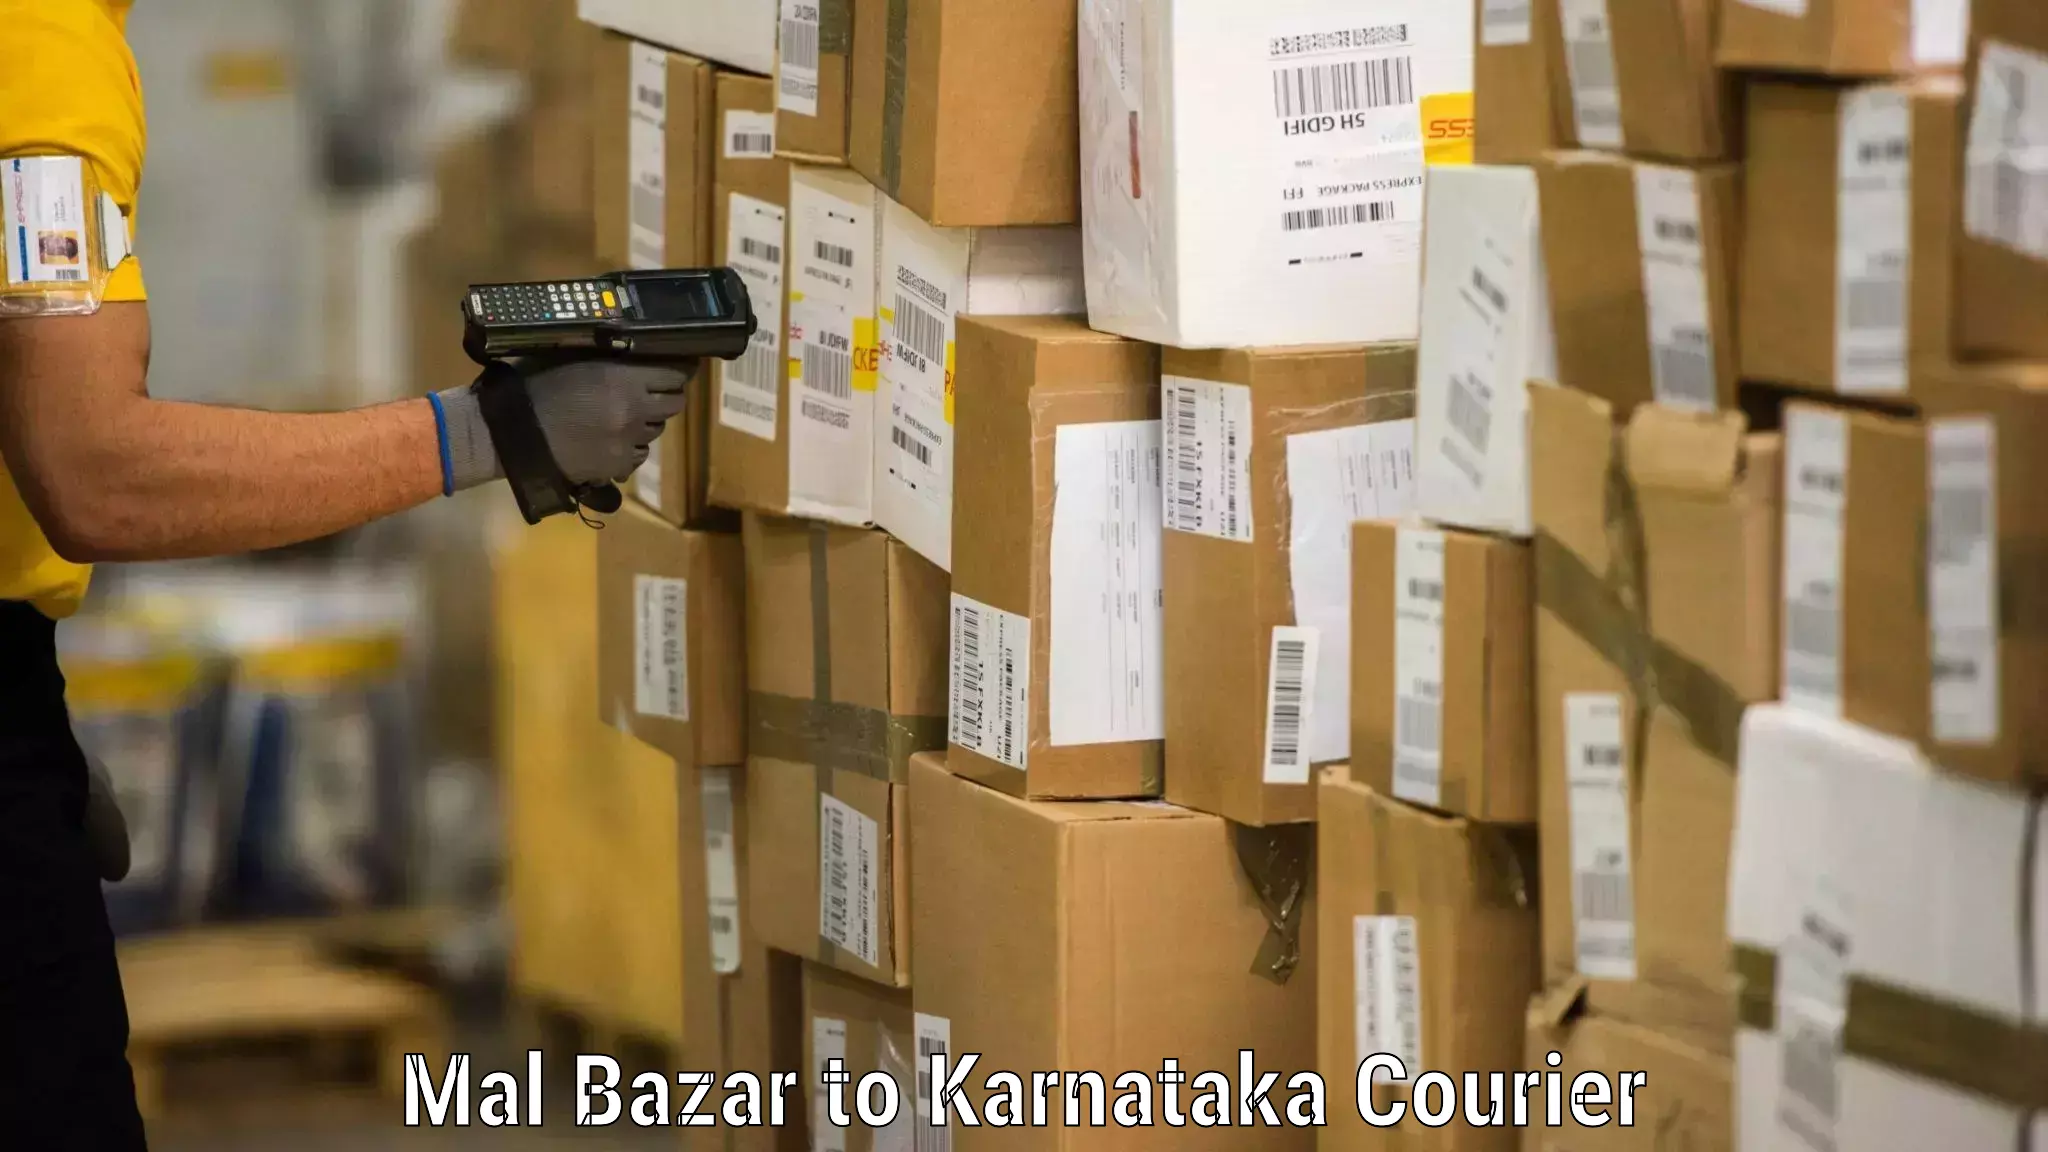 Quality relocation assistance Mal Bazar to Karnataka